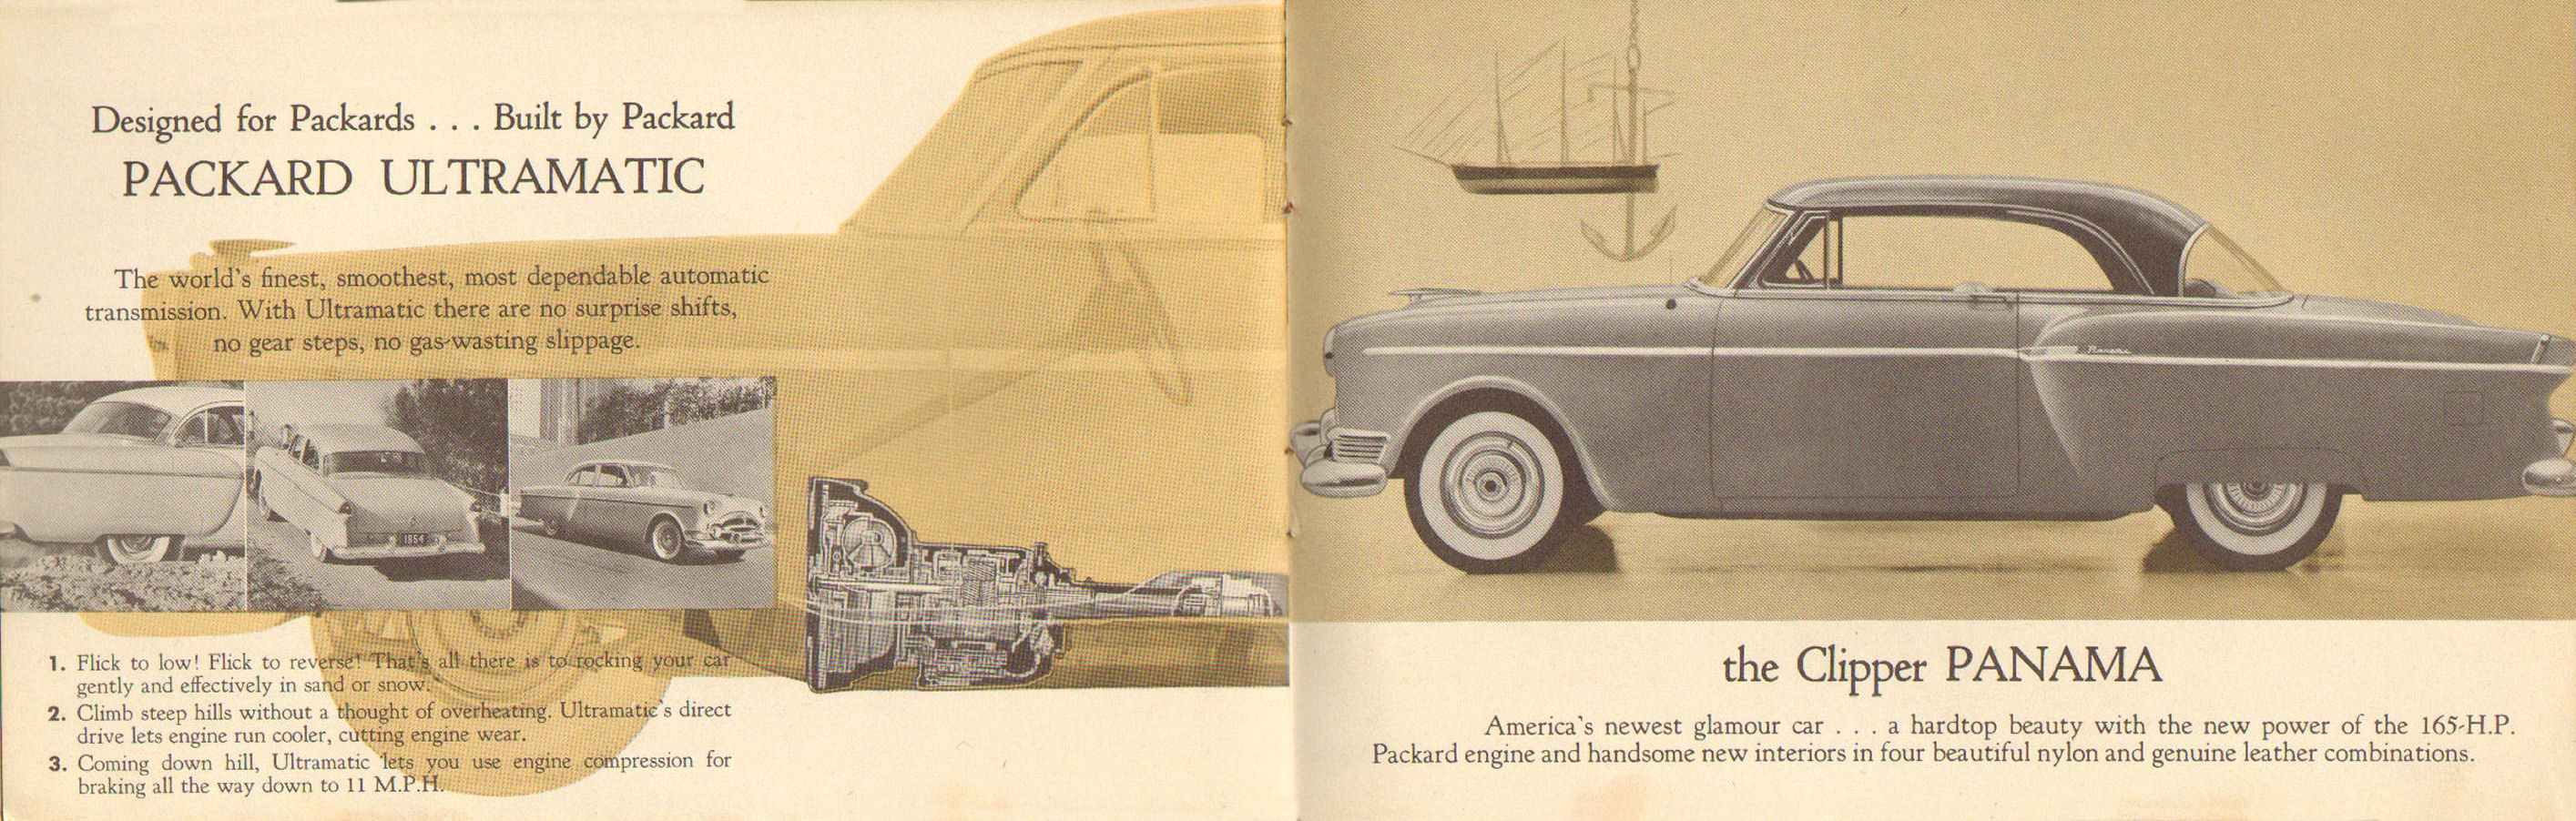 1954_Packard_Personal_Demo_Mailer-10-11